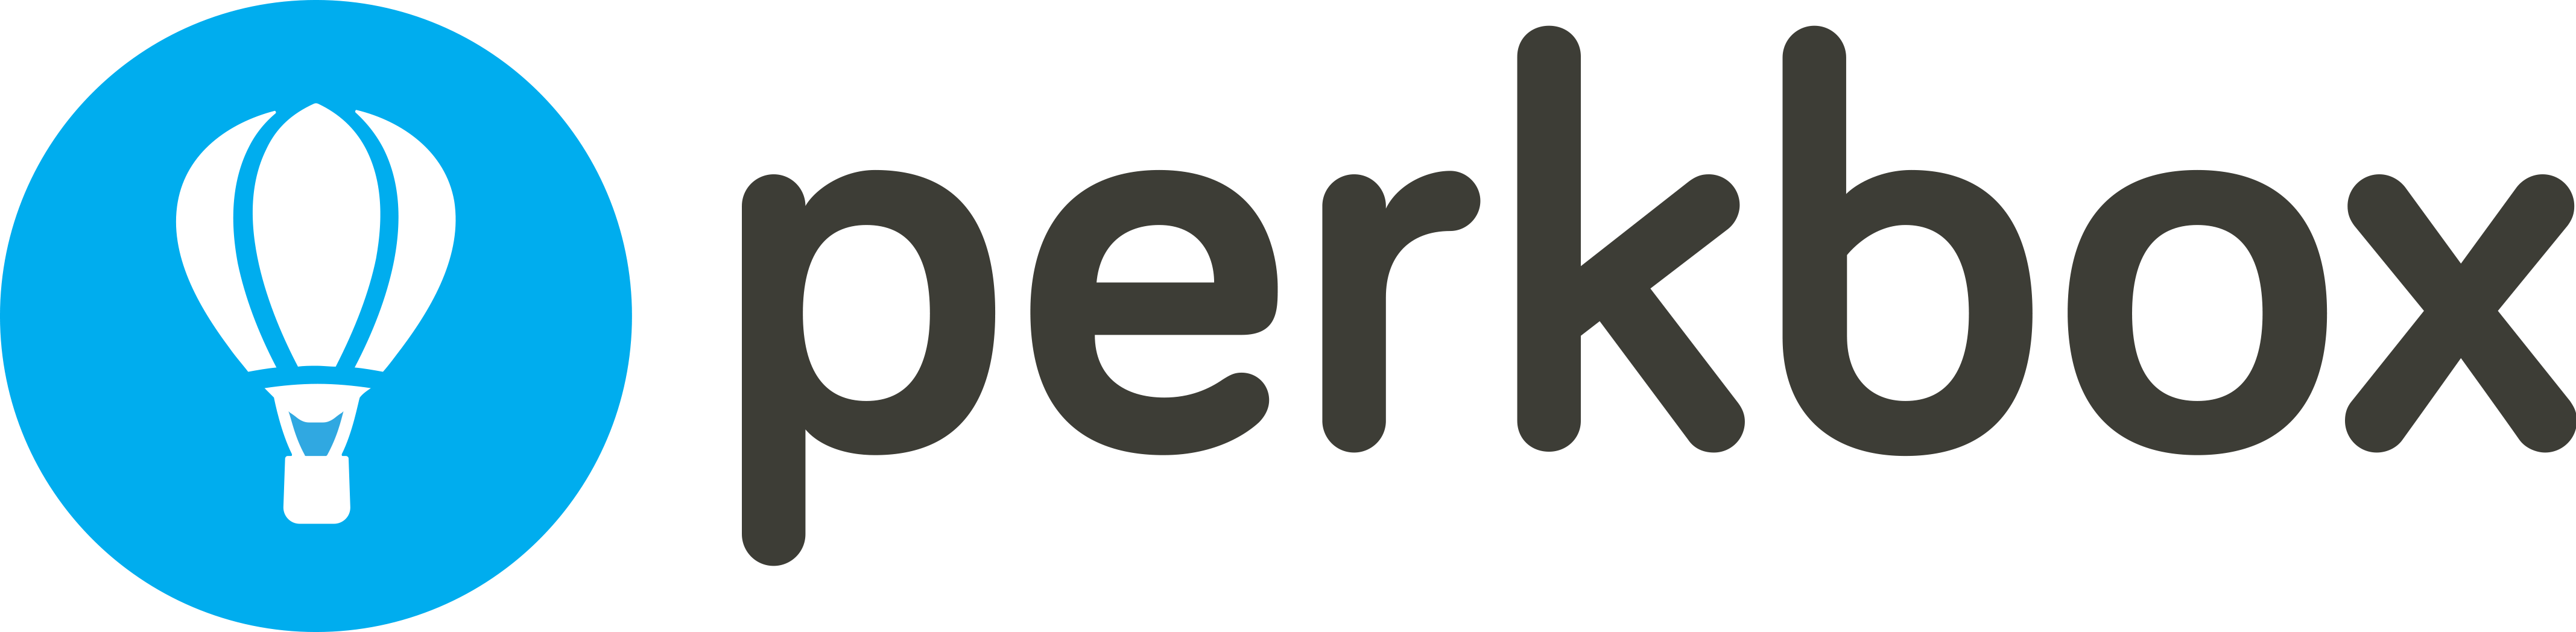 perkbox-logo